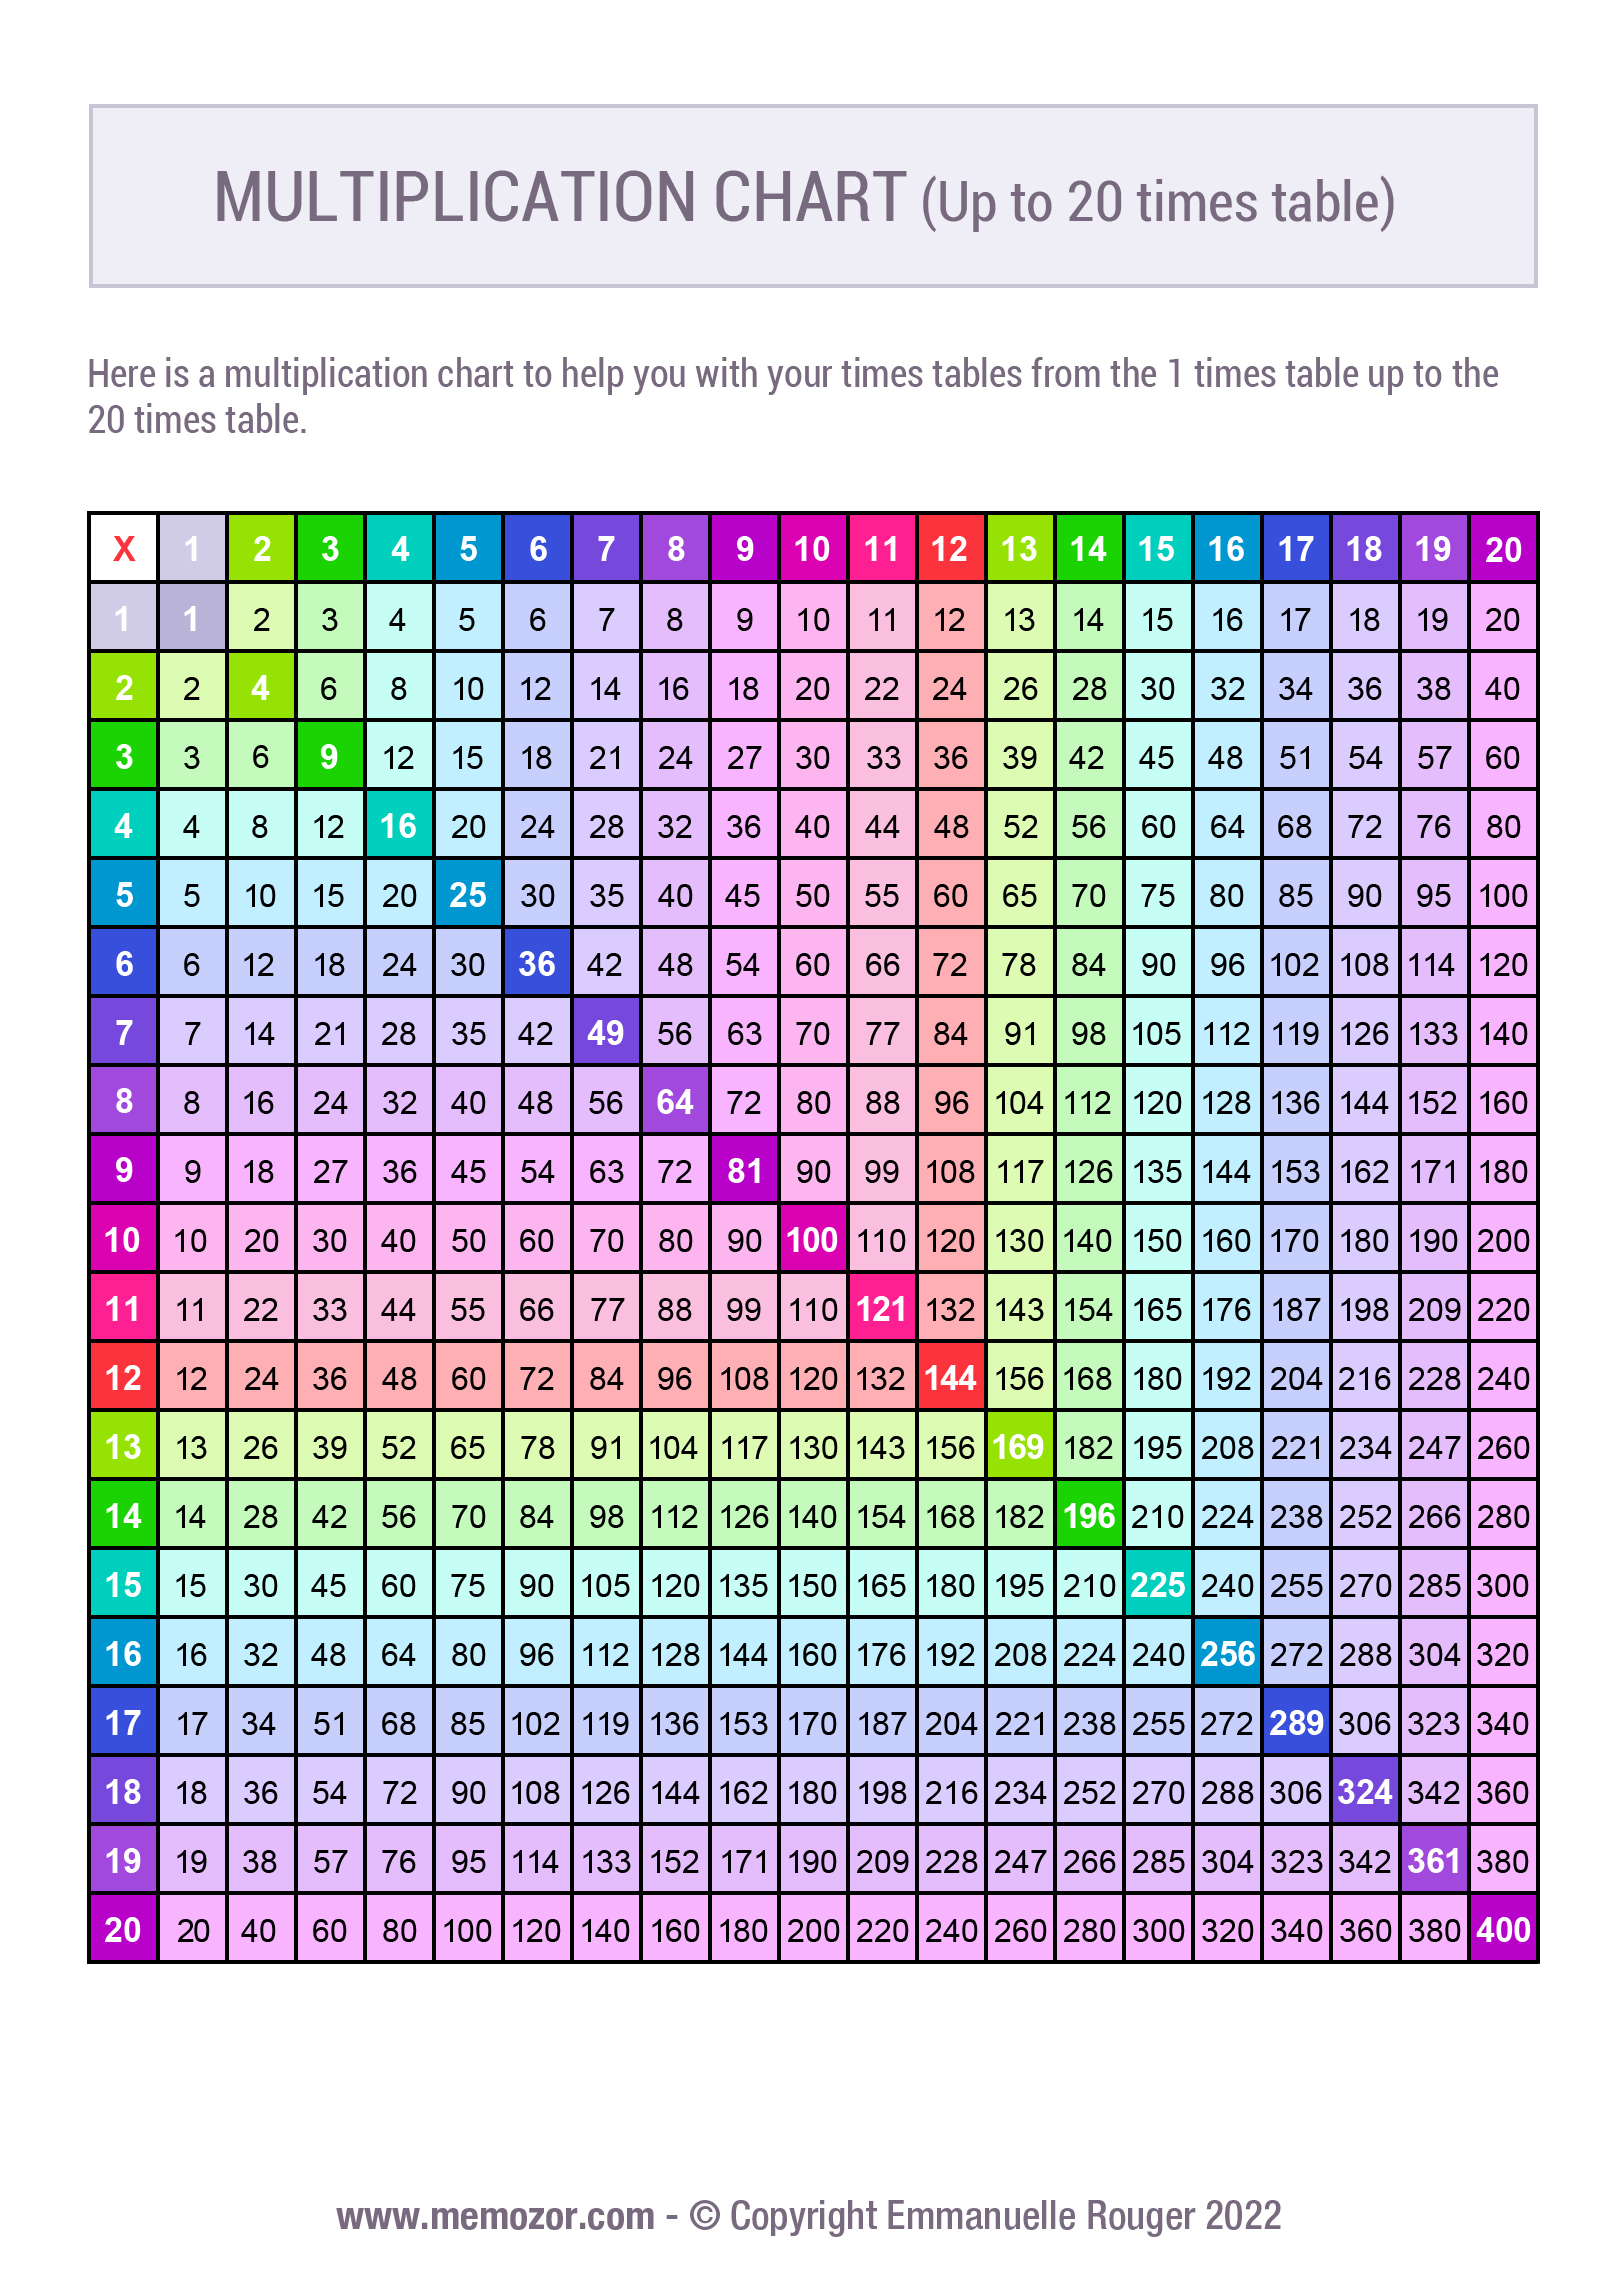 printable-colorful-multiplication-chart-1-20-tricks-free-memozor